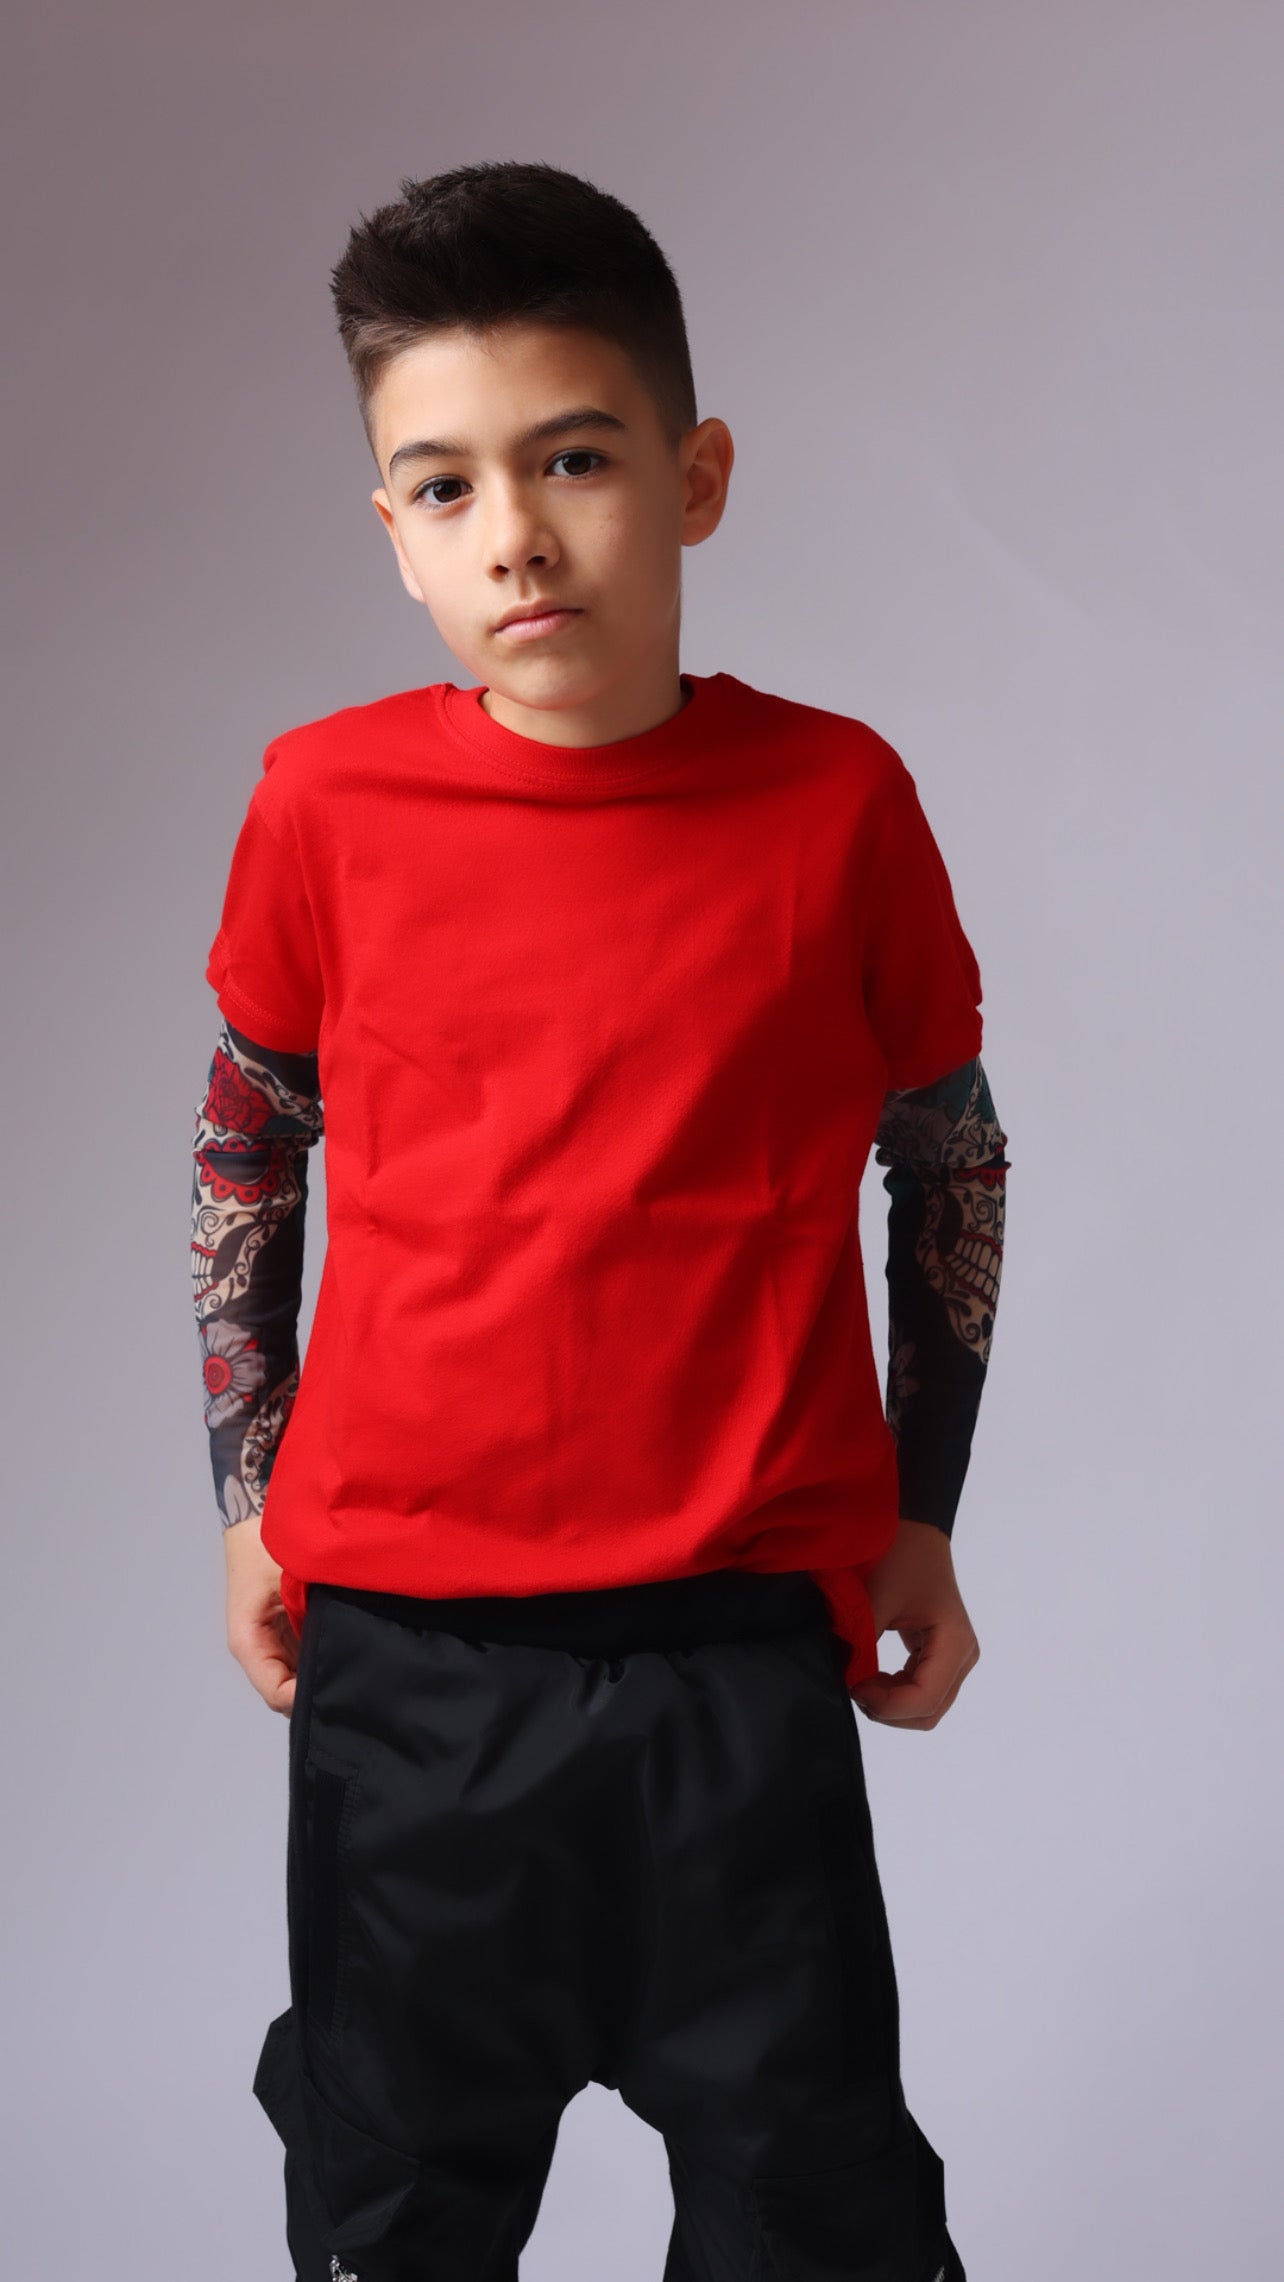 Tricou tatuaje Destiny - unisex pentru copii si adulti - Alb / Negru / Gri / Rosu